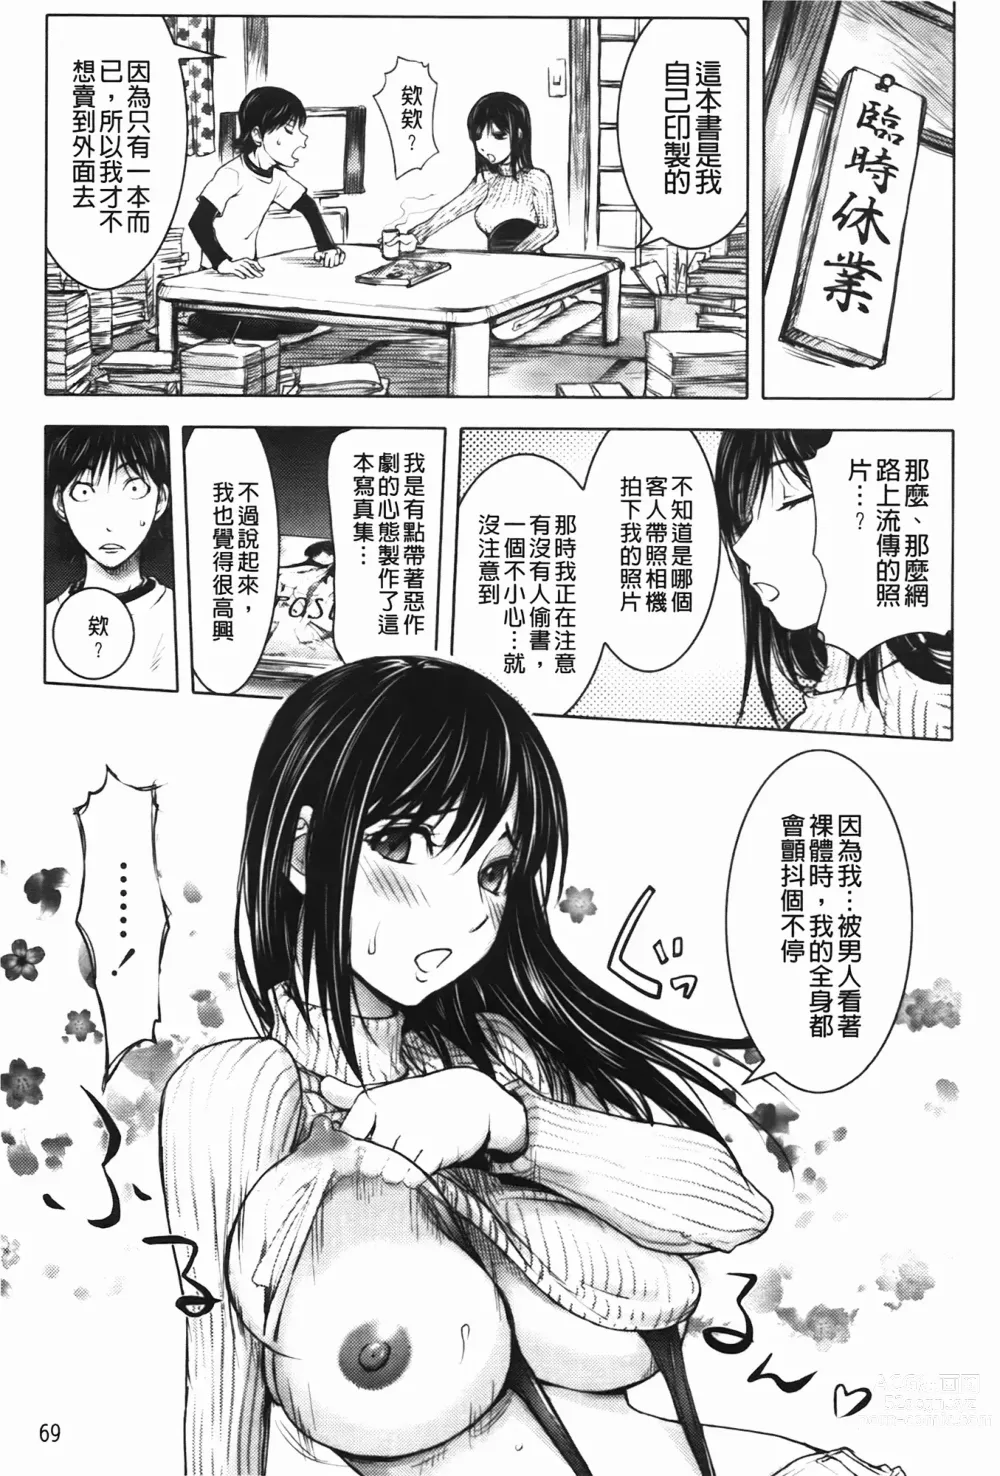 Page 7 of manga Midara Books 1-4